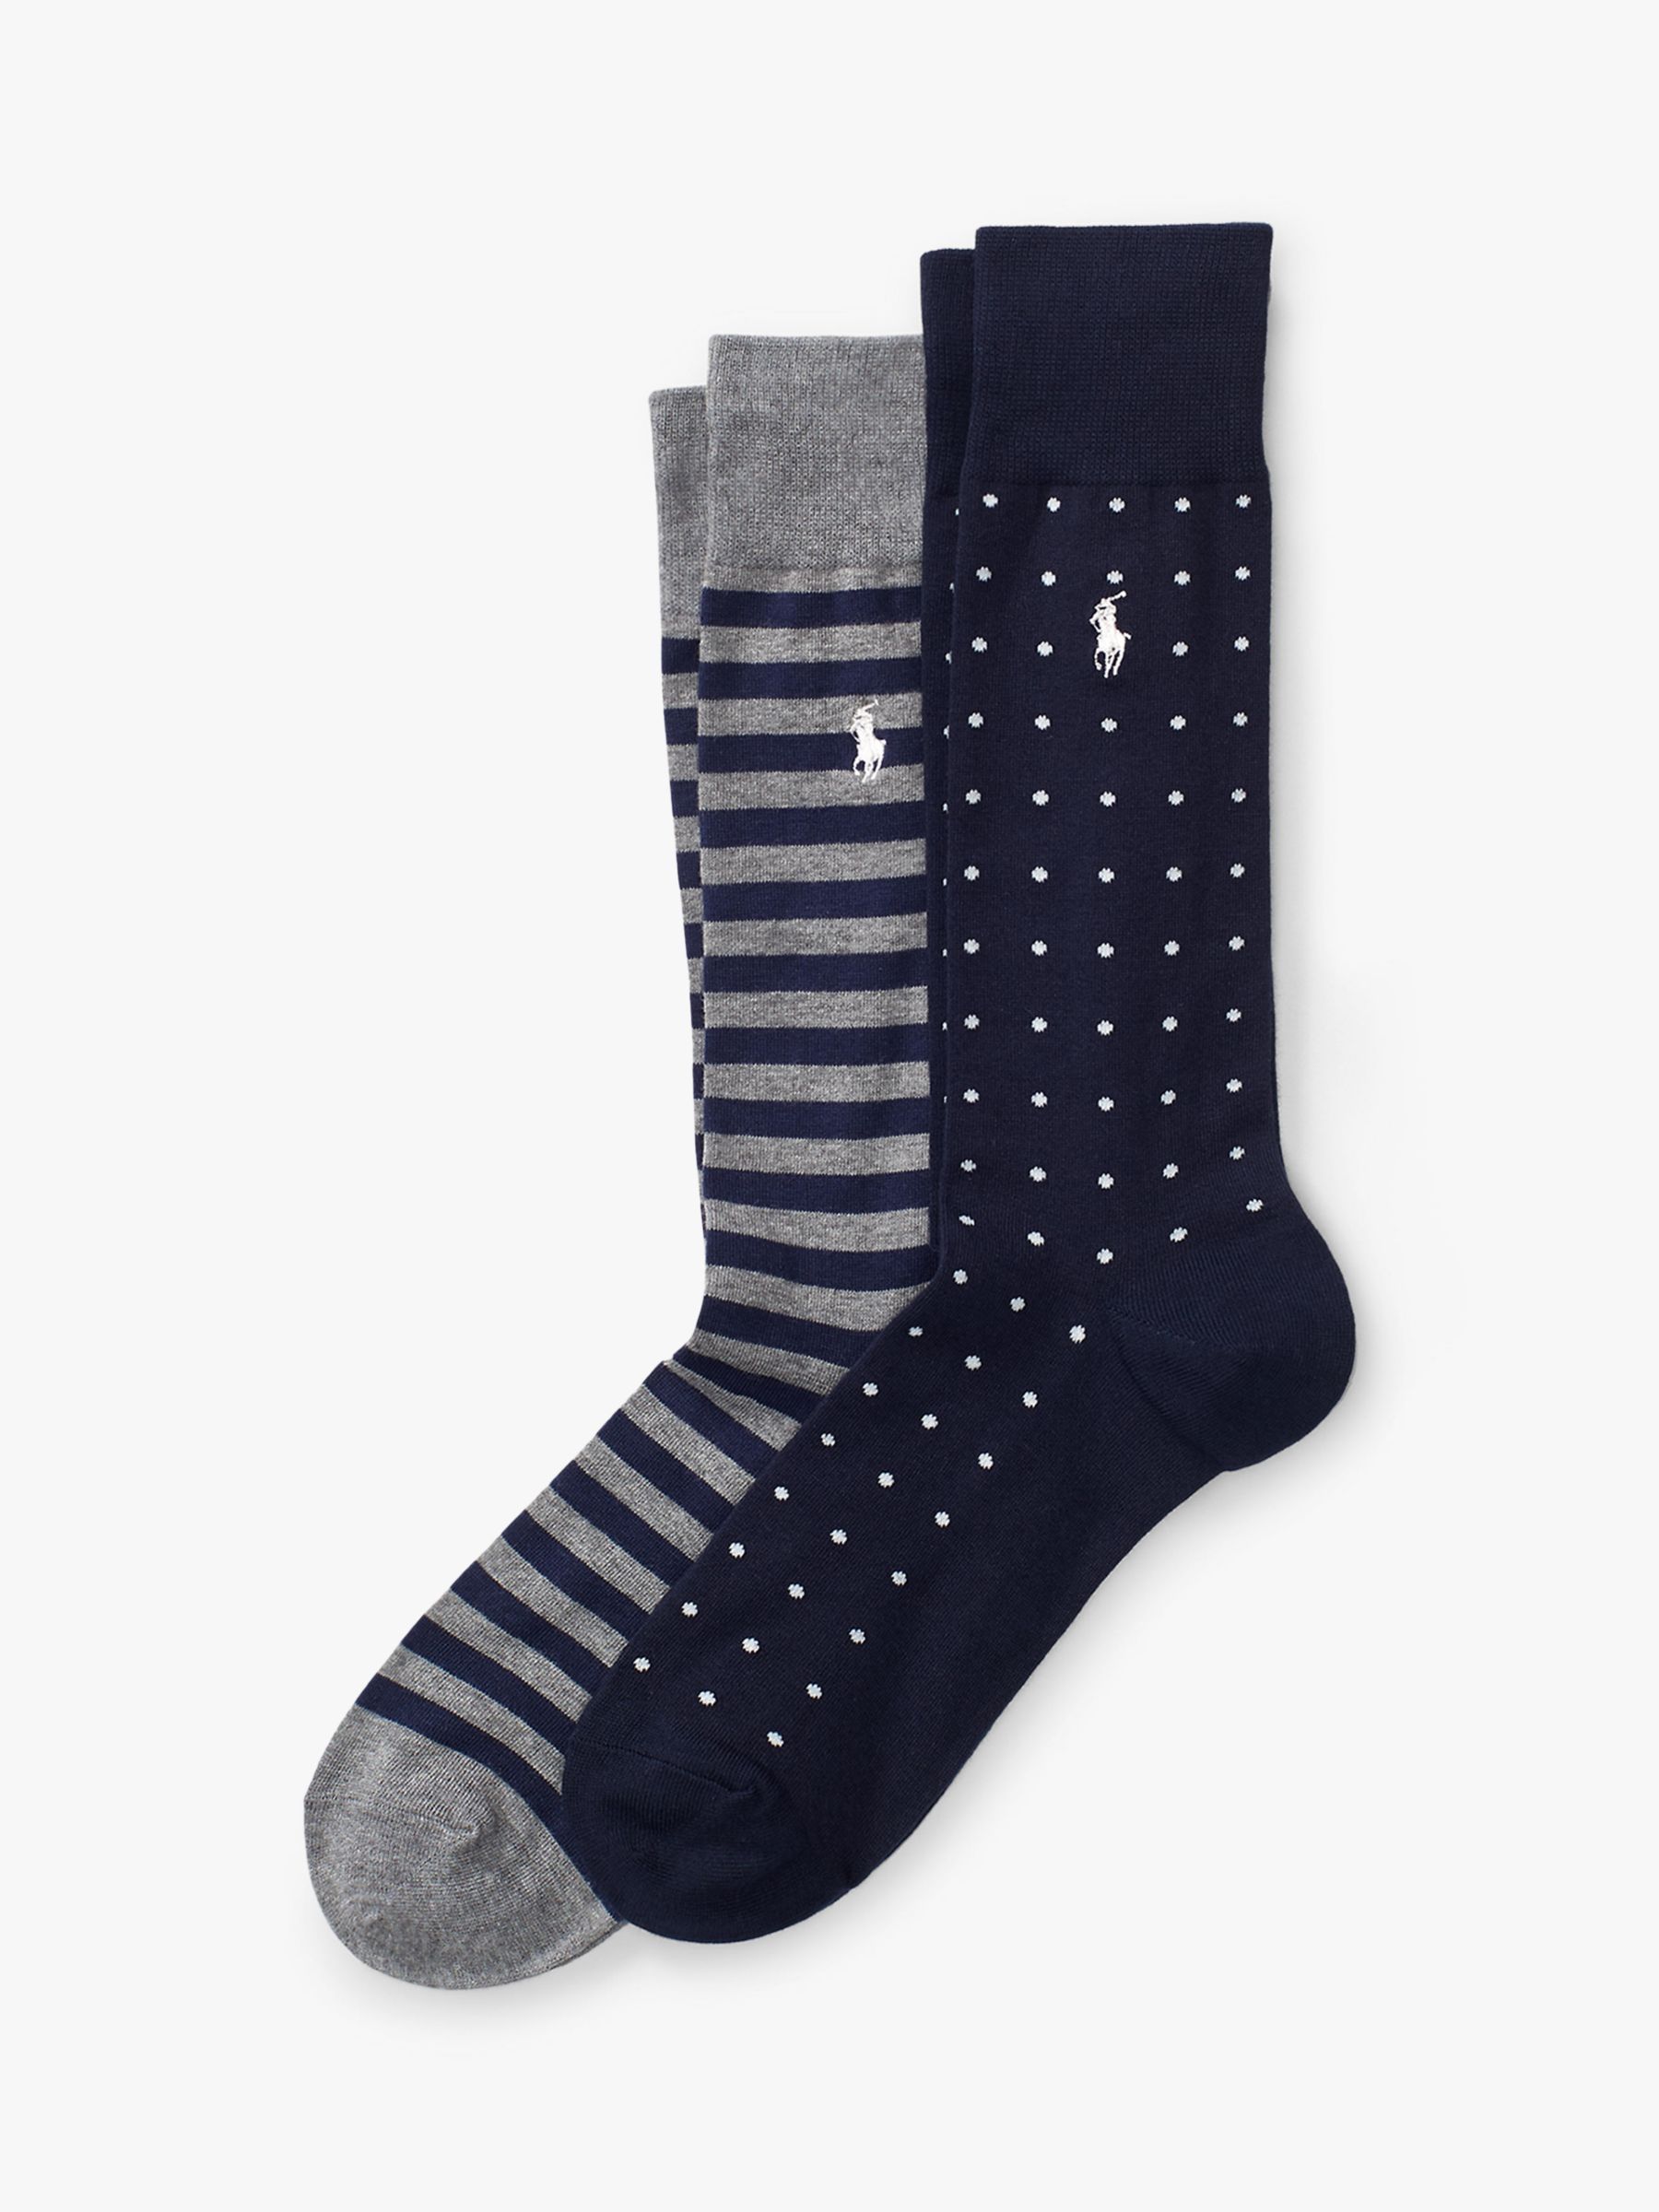 Buy Polo Ralph Lauren Dot Stripe Socks, One Size, Pack of 2, Navy/Grey Online at johnlewis.com